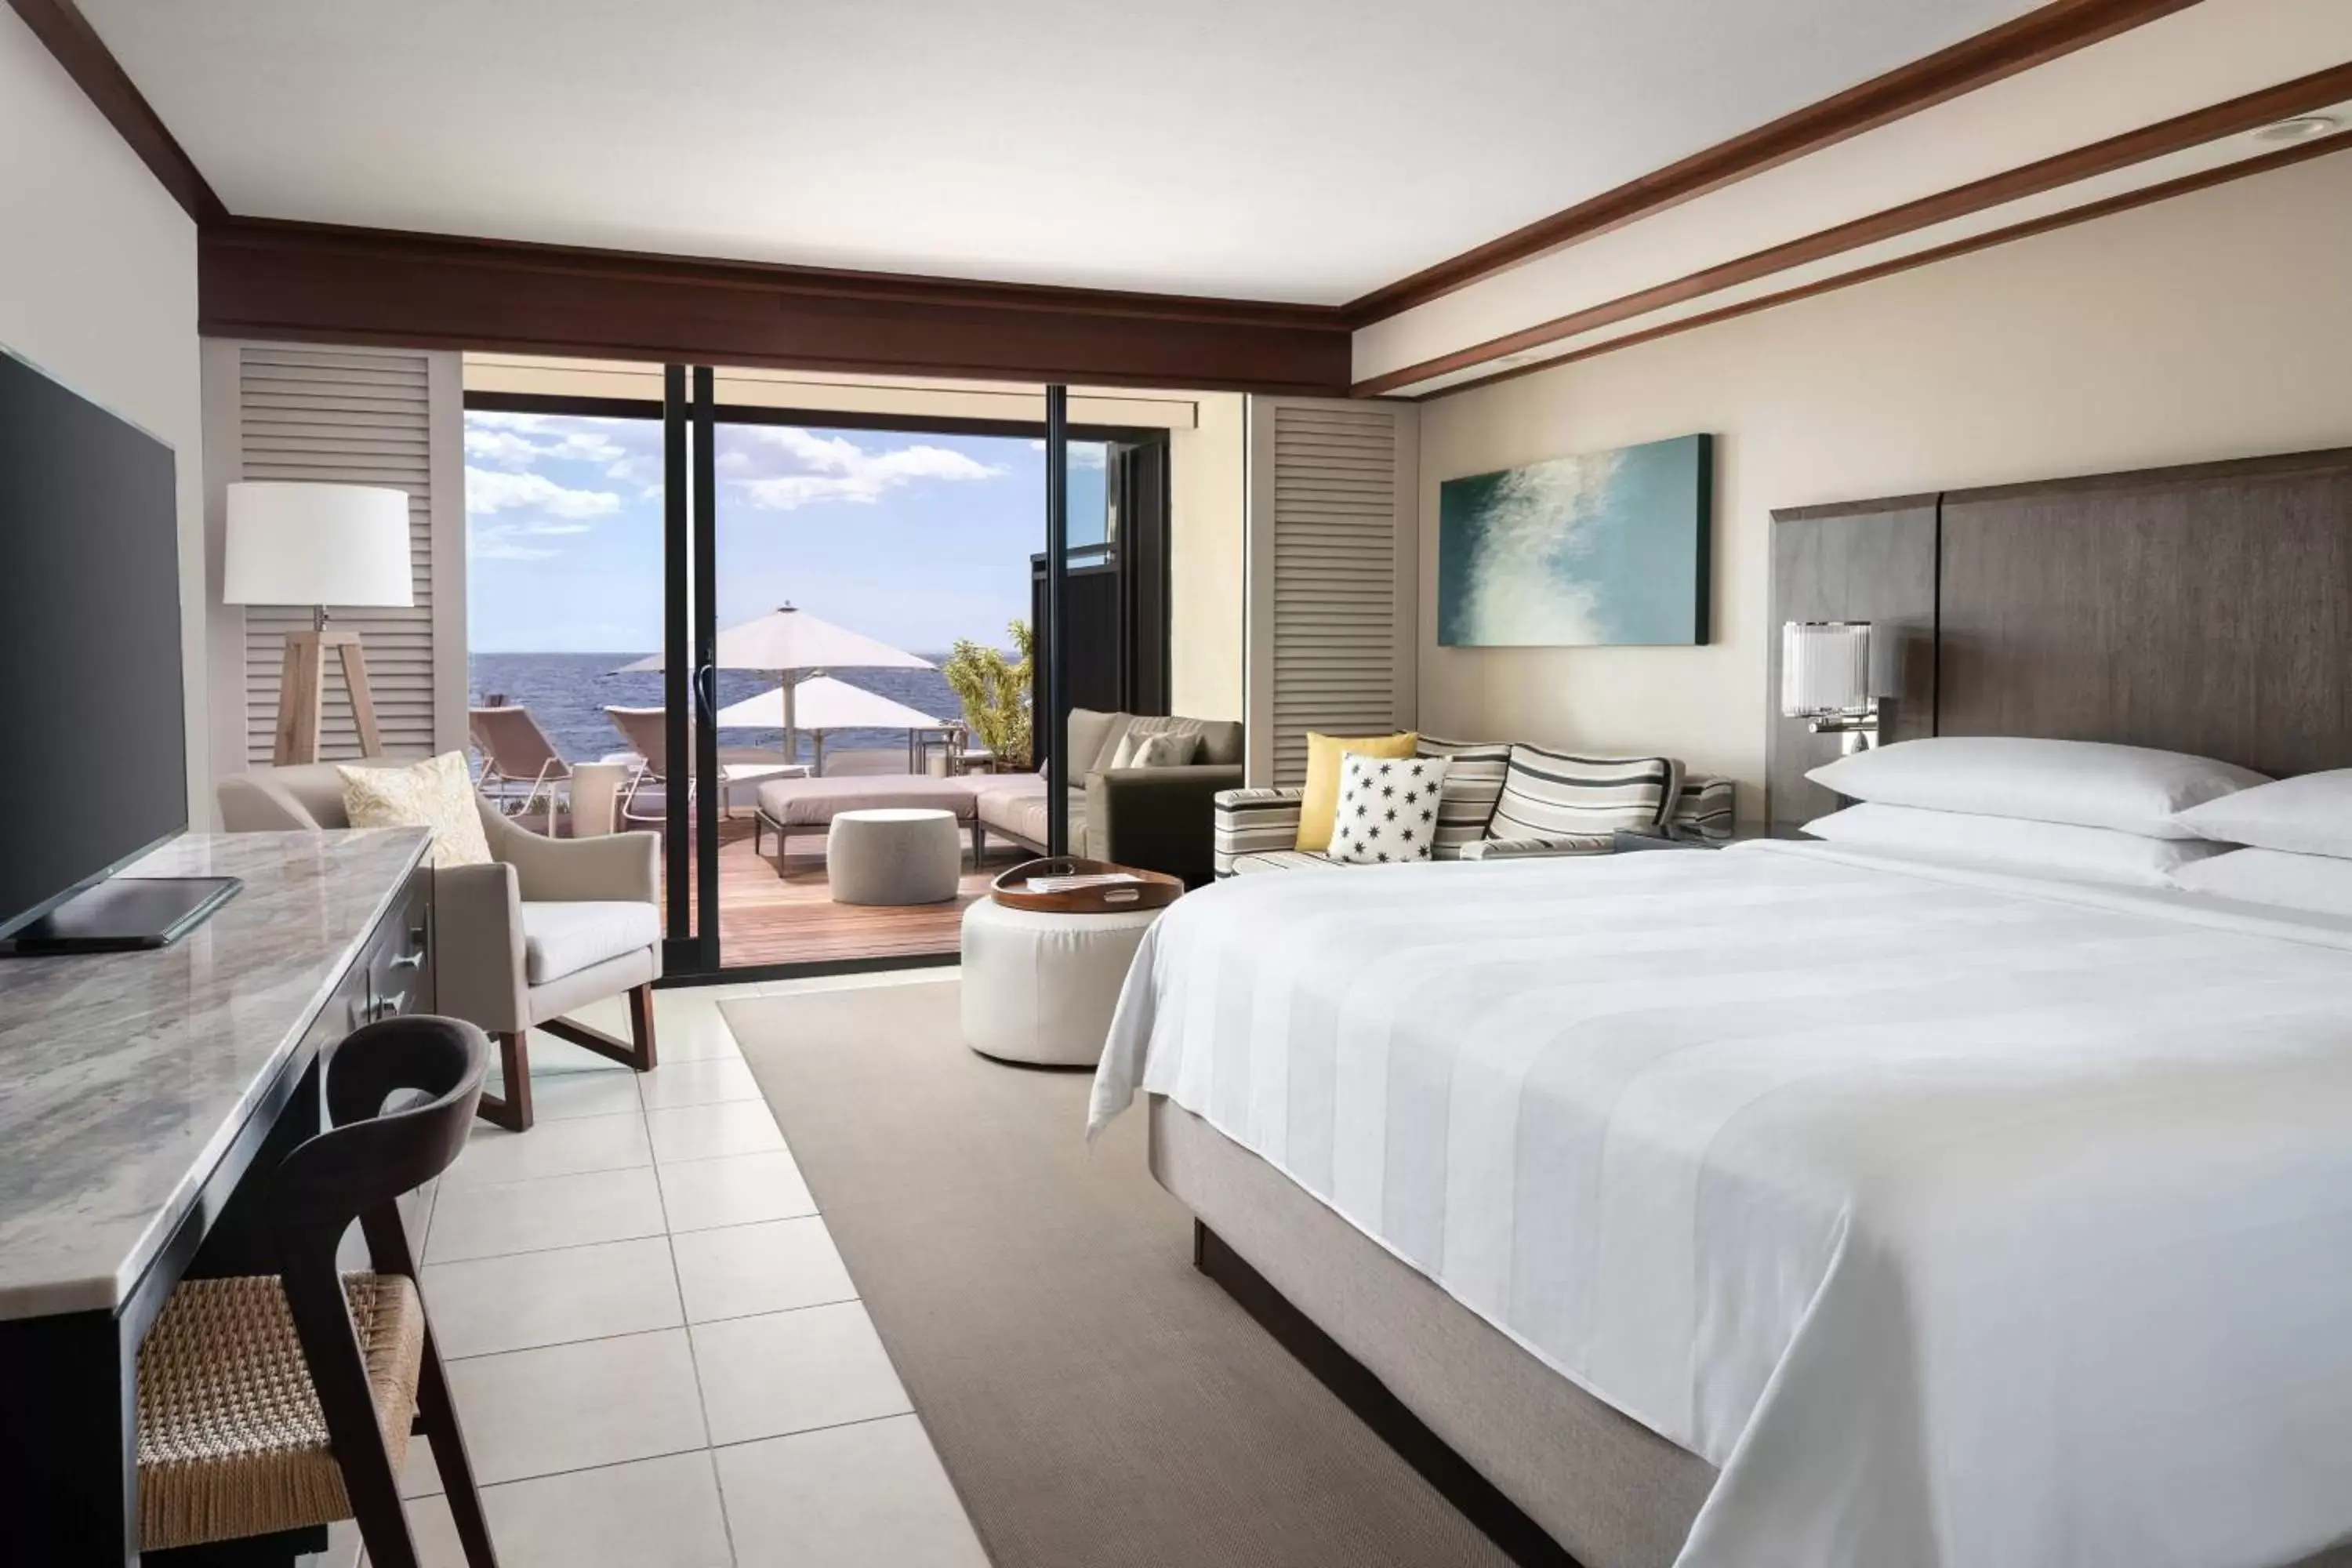 Photo of the whole room in Wailea Beach Resort - Marriott, Maui